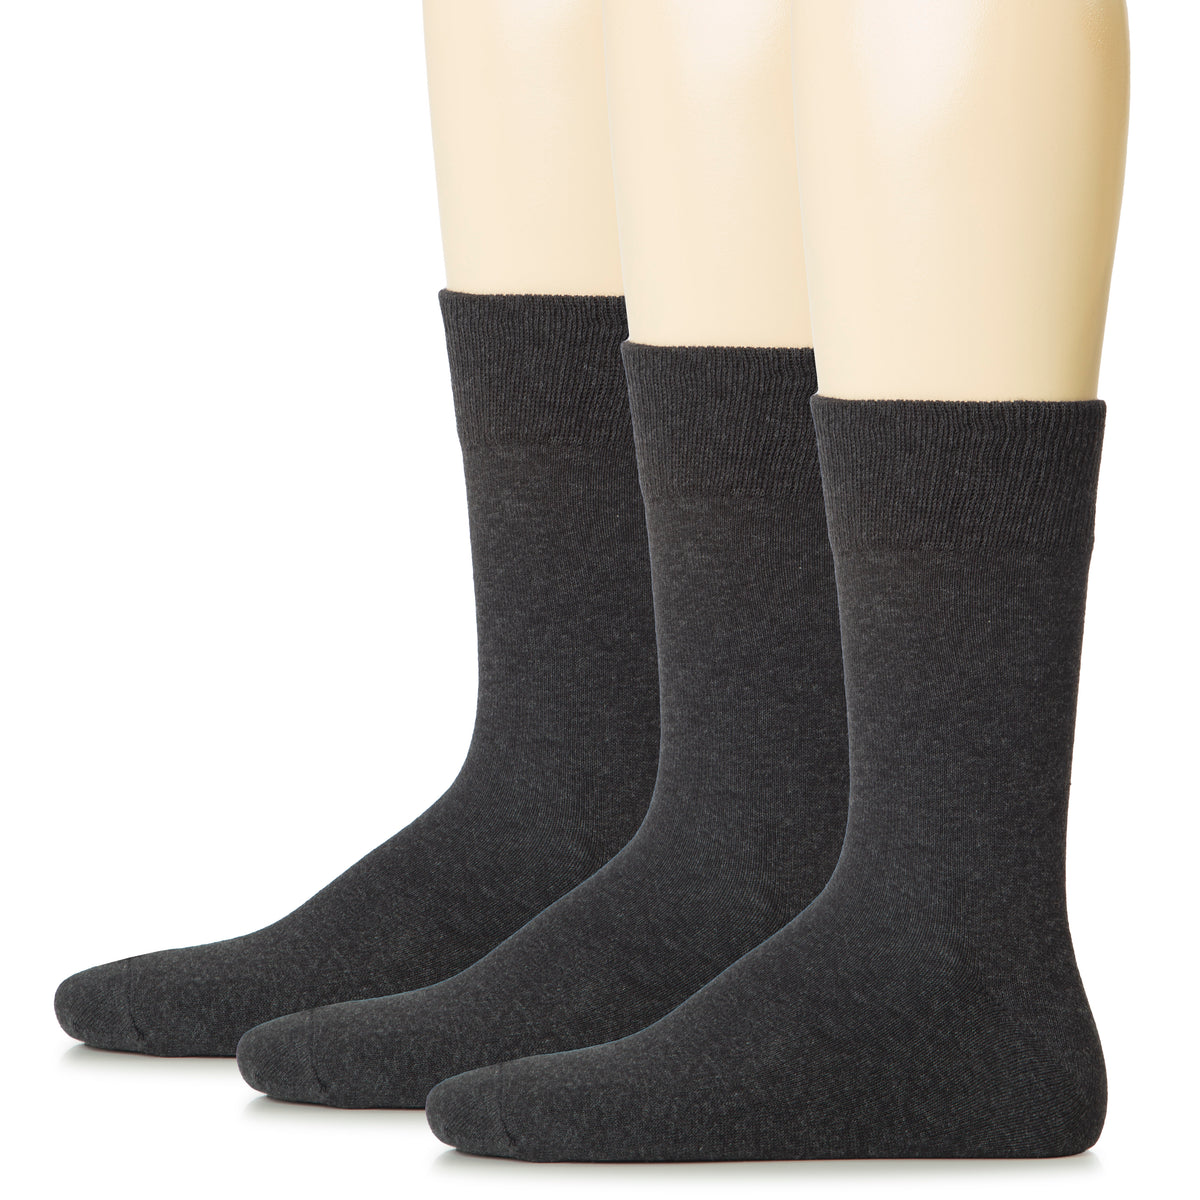 Hugh Ugoli Men Cotton Dress Socks XL / L / M / S Sizes, 3 Pairs | Shoe Size: 8-10 | Charcoal